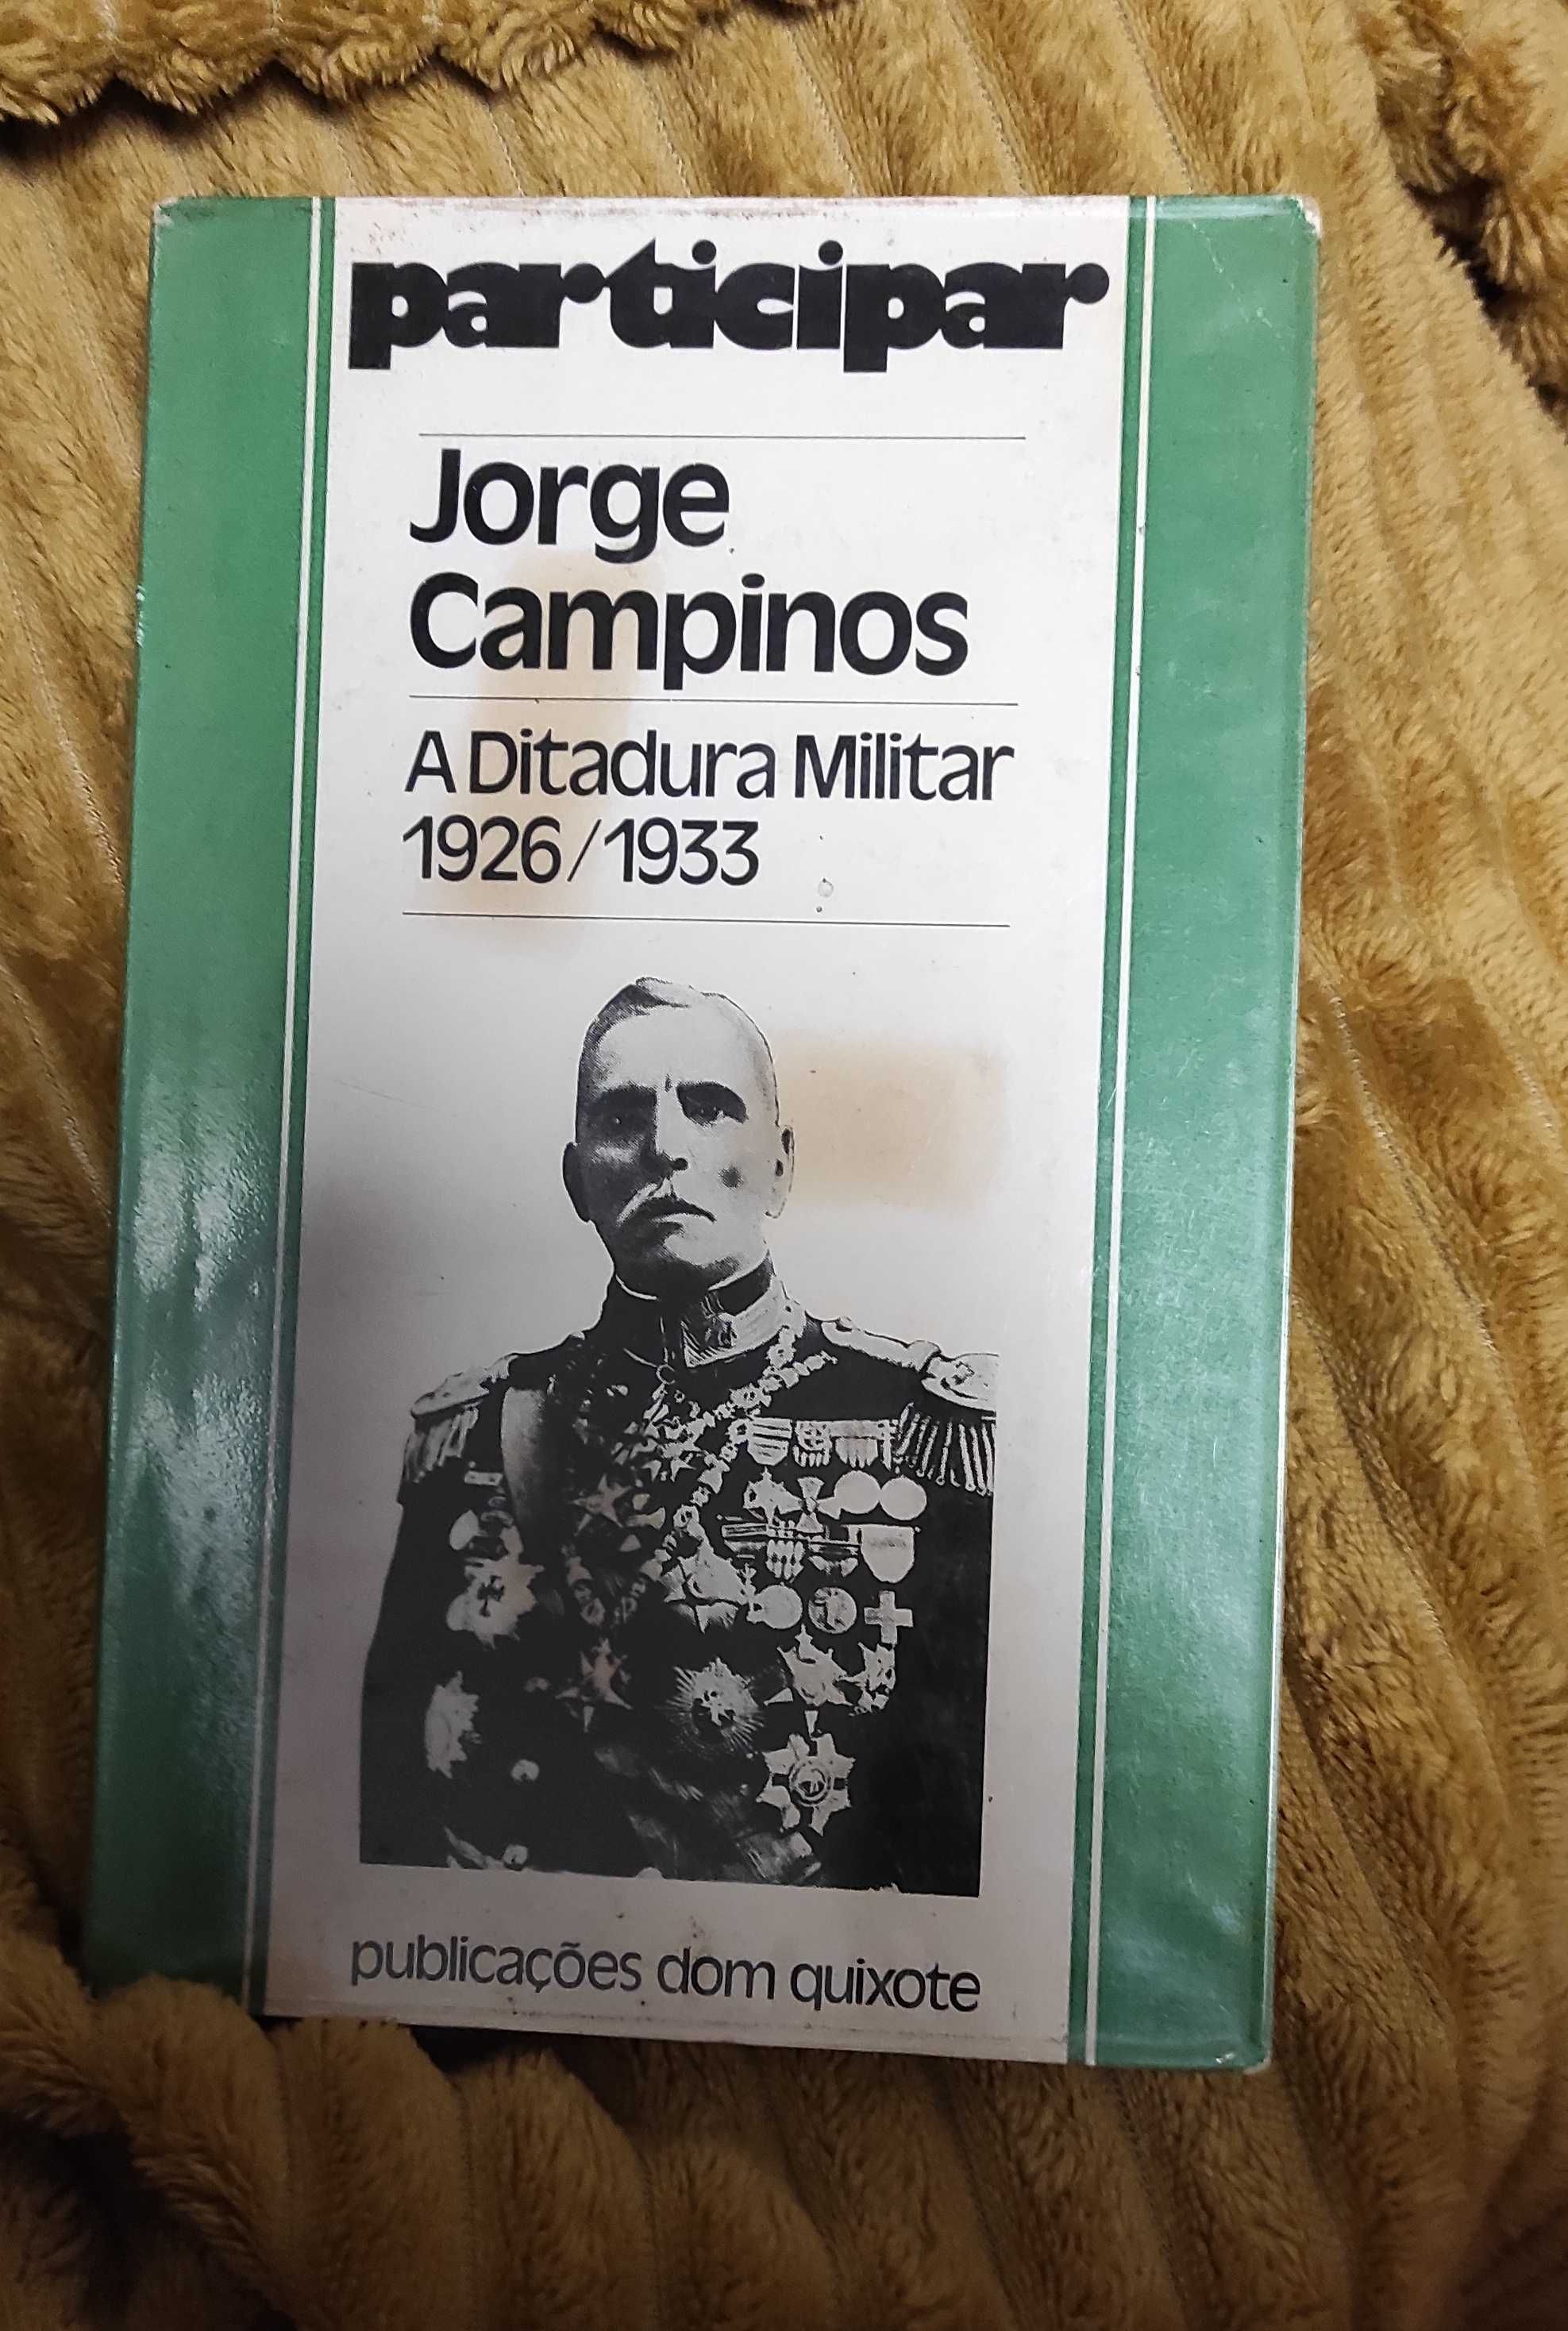 A Ditadura Militar 

Jorge Campinos